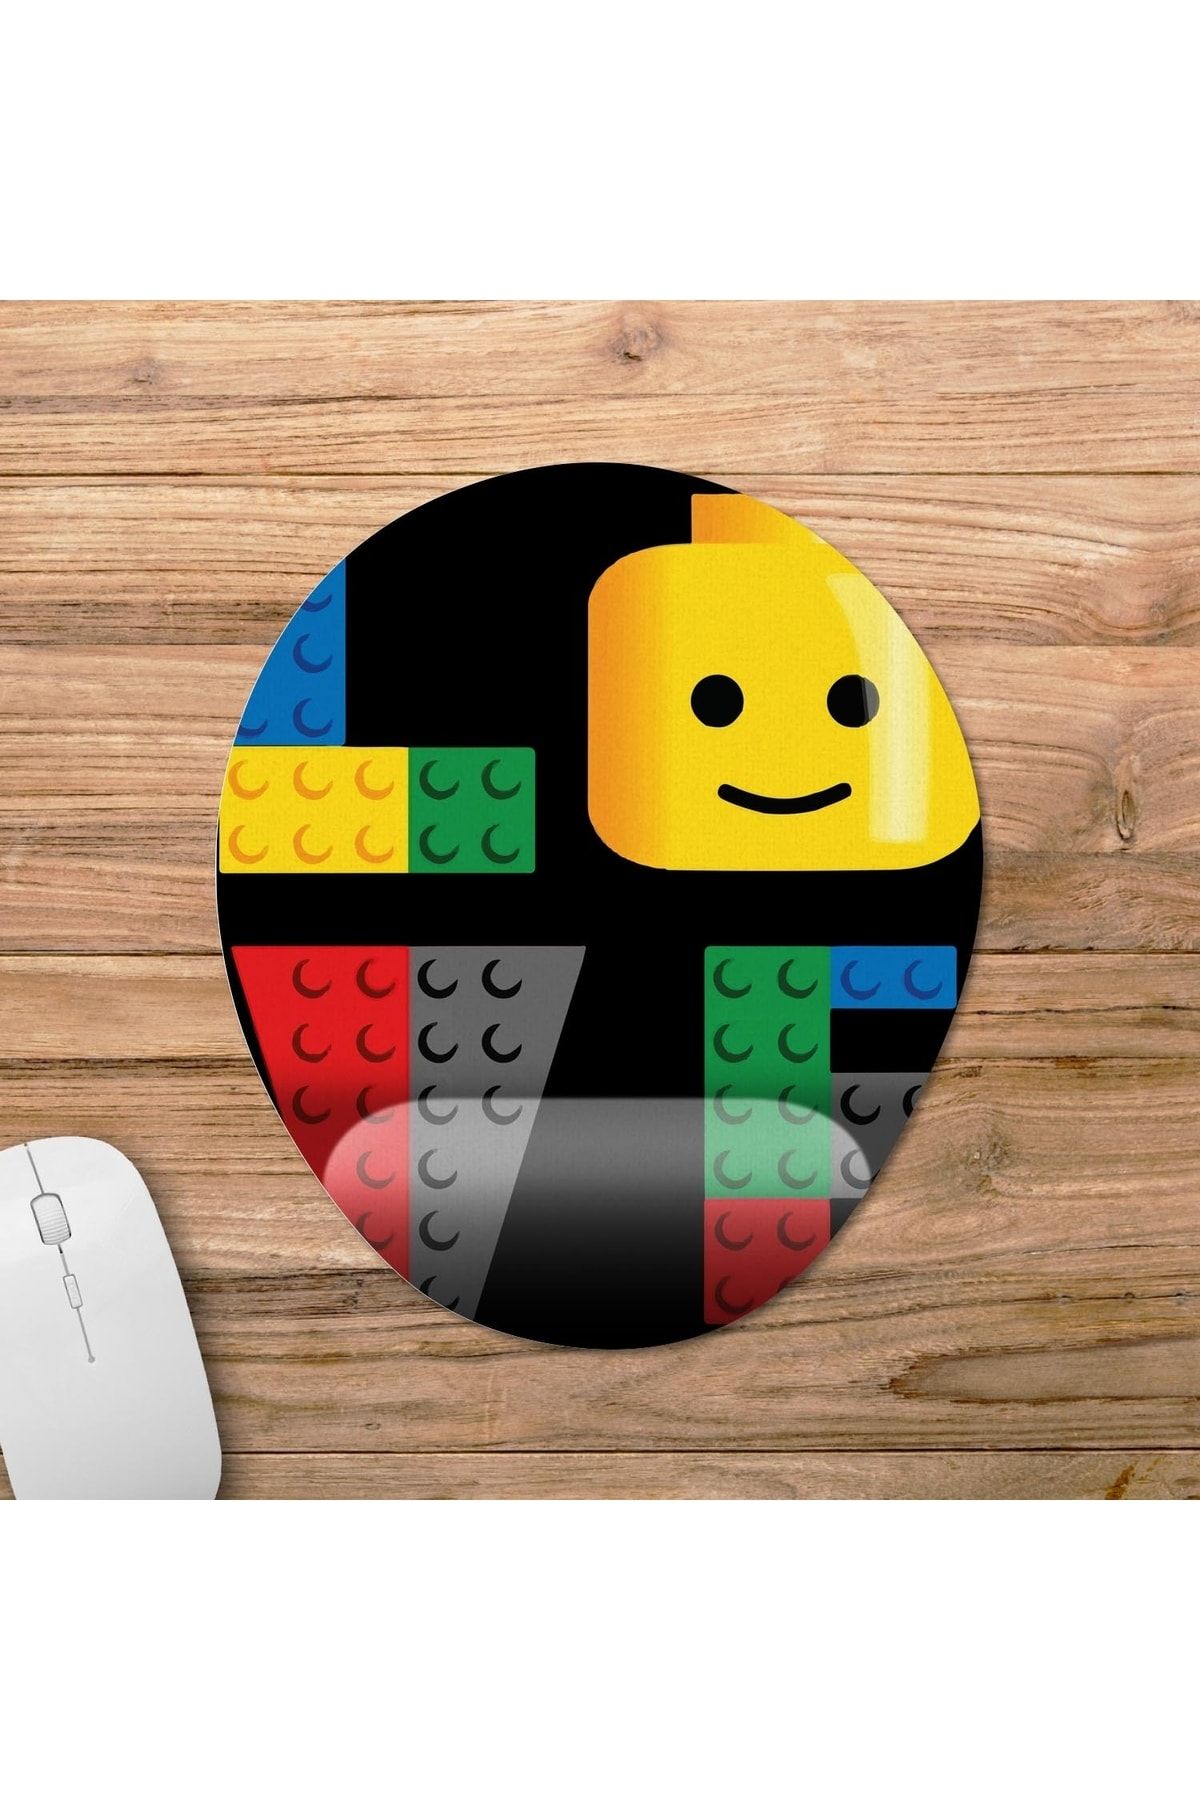 Pixxa Lego Bilek Destekli Mousepad Model - 1 Oval